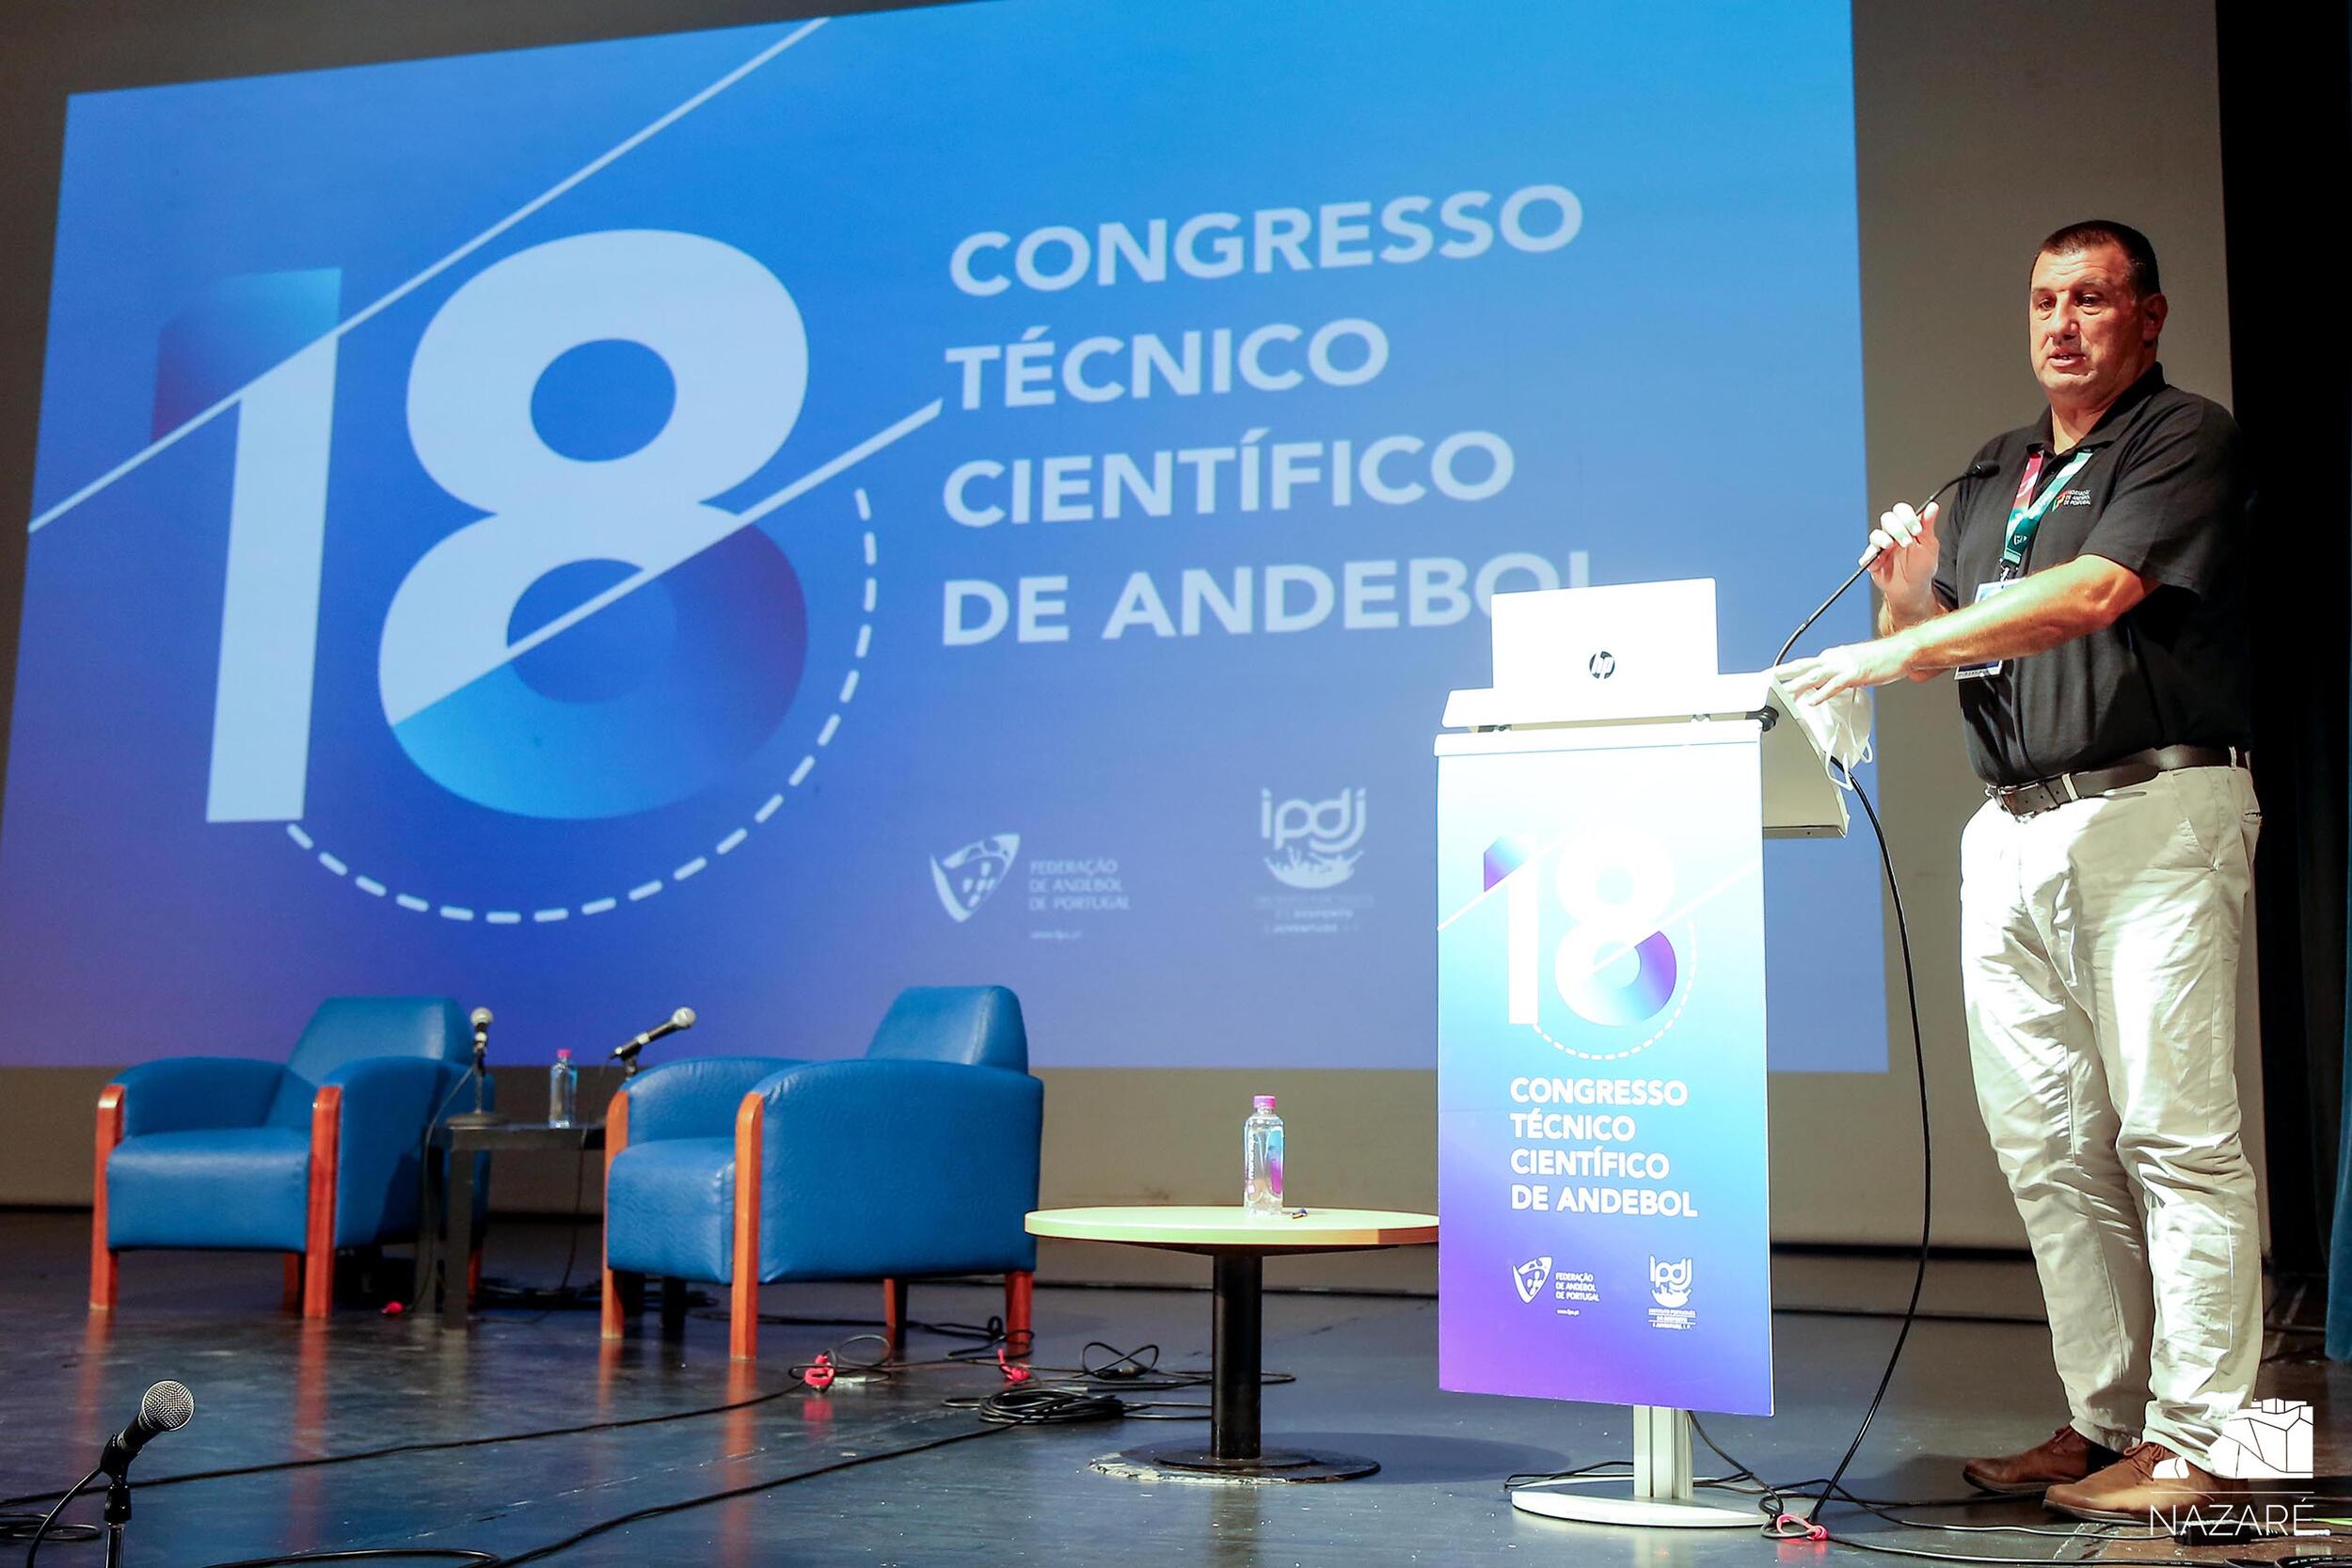 18º Congresso Técnico Científico de Andebol decorreu na Nazaré 